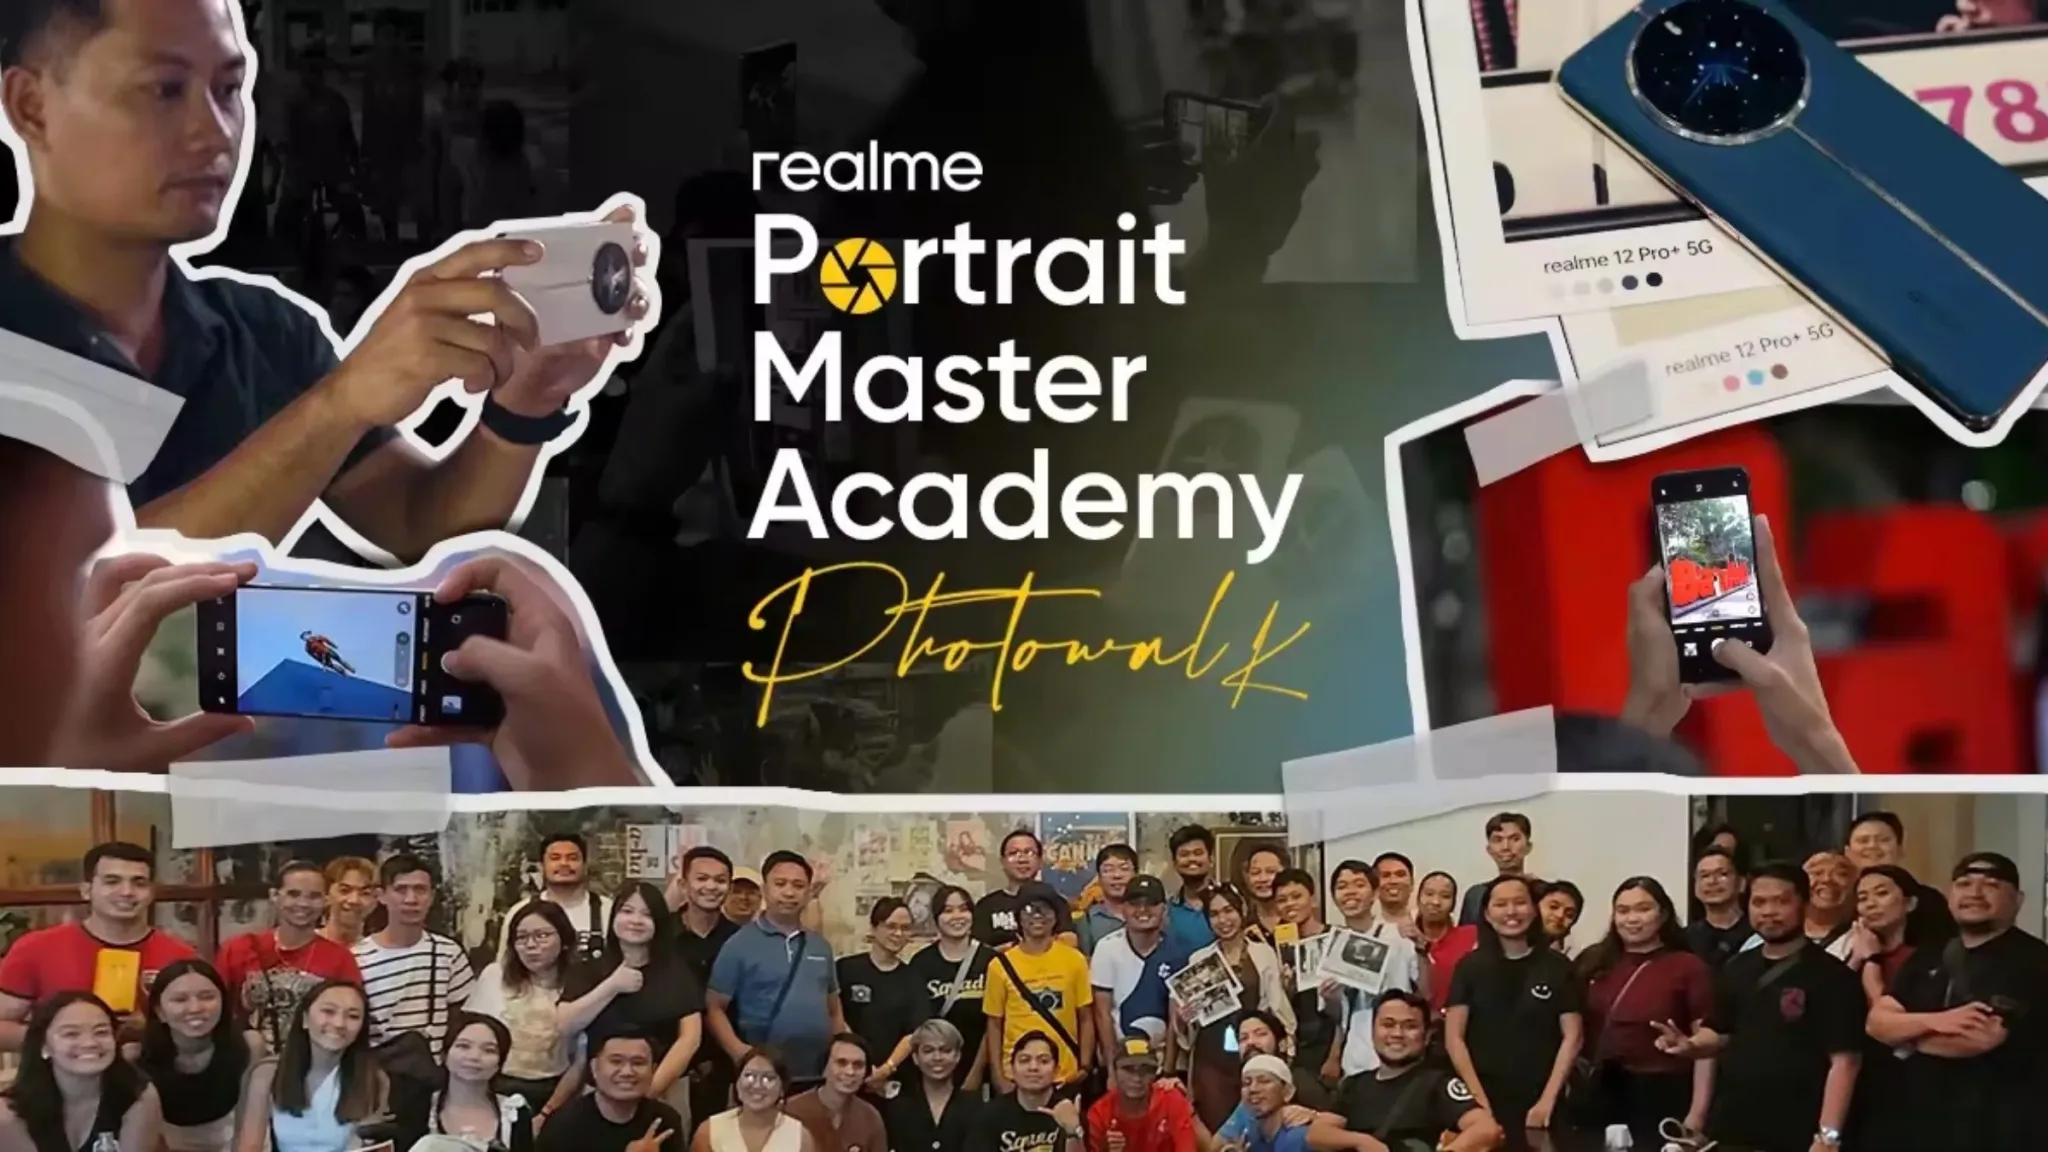 realme Portrait Master Academy VisMin Header